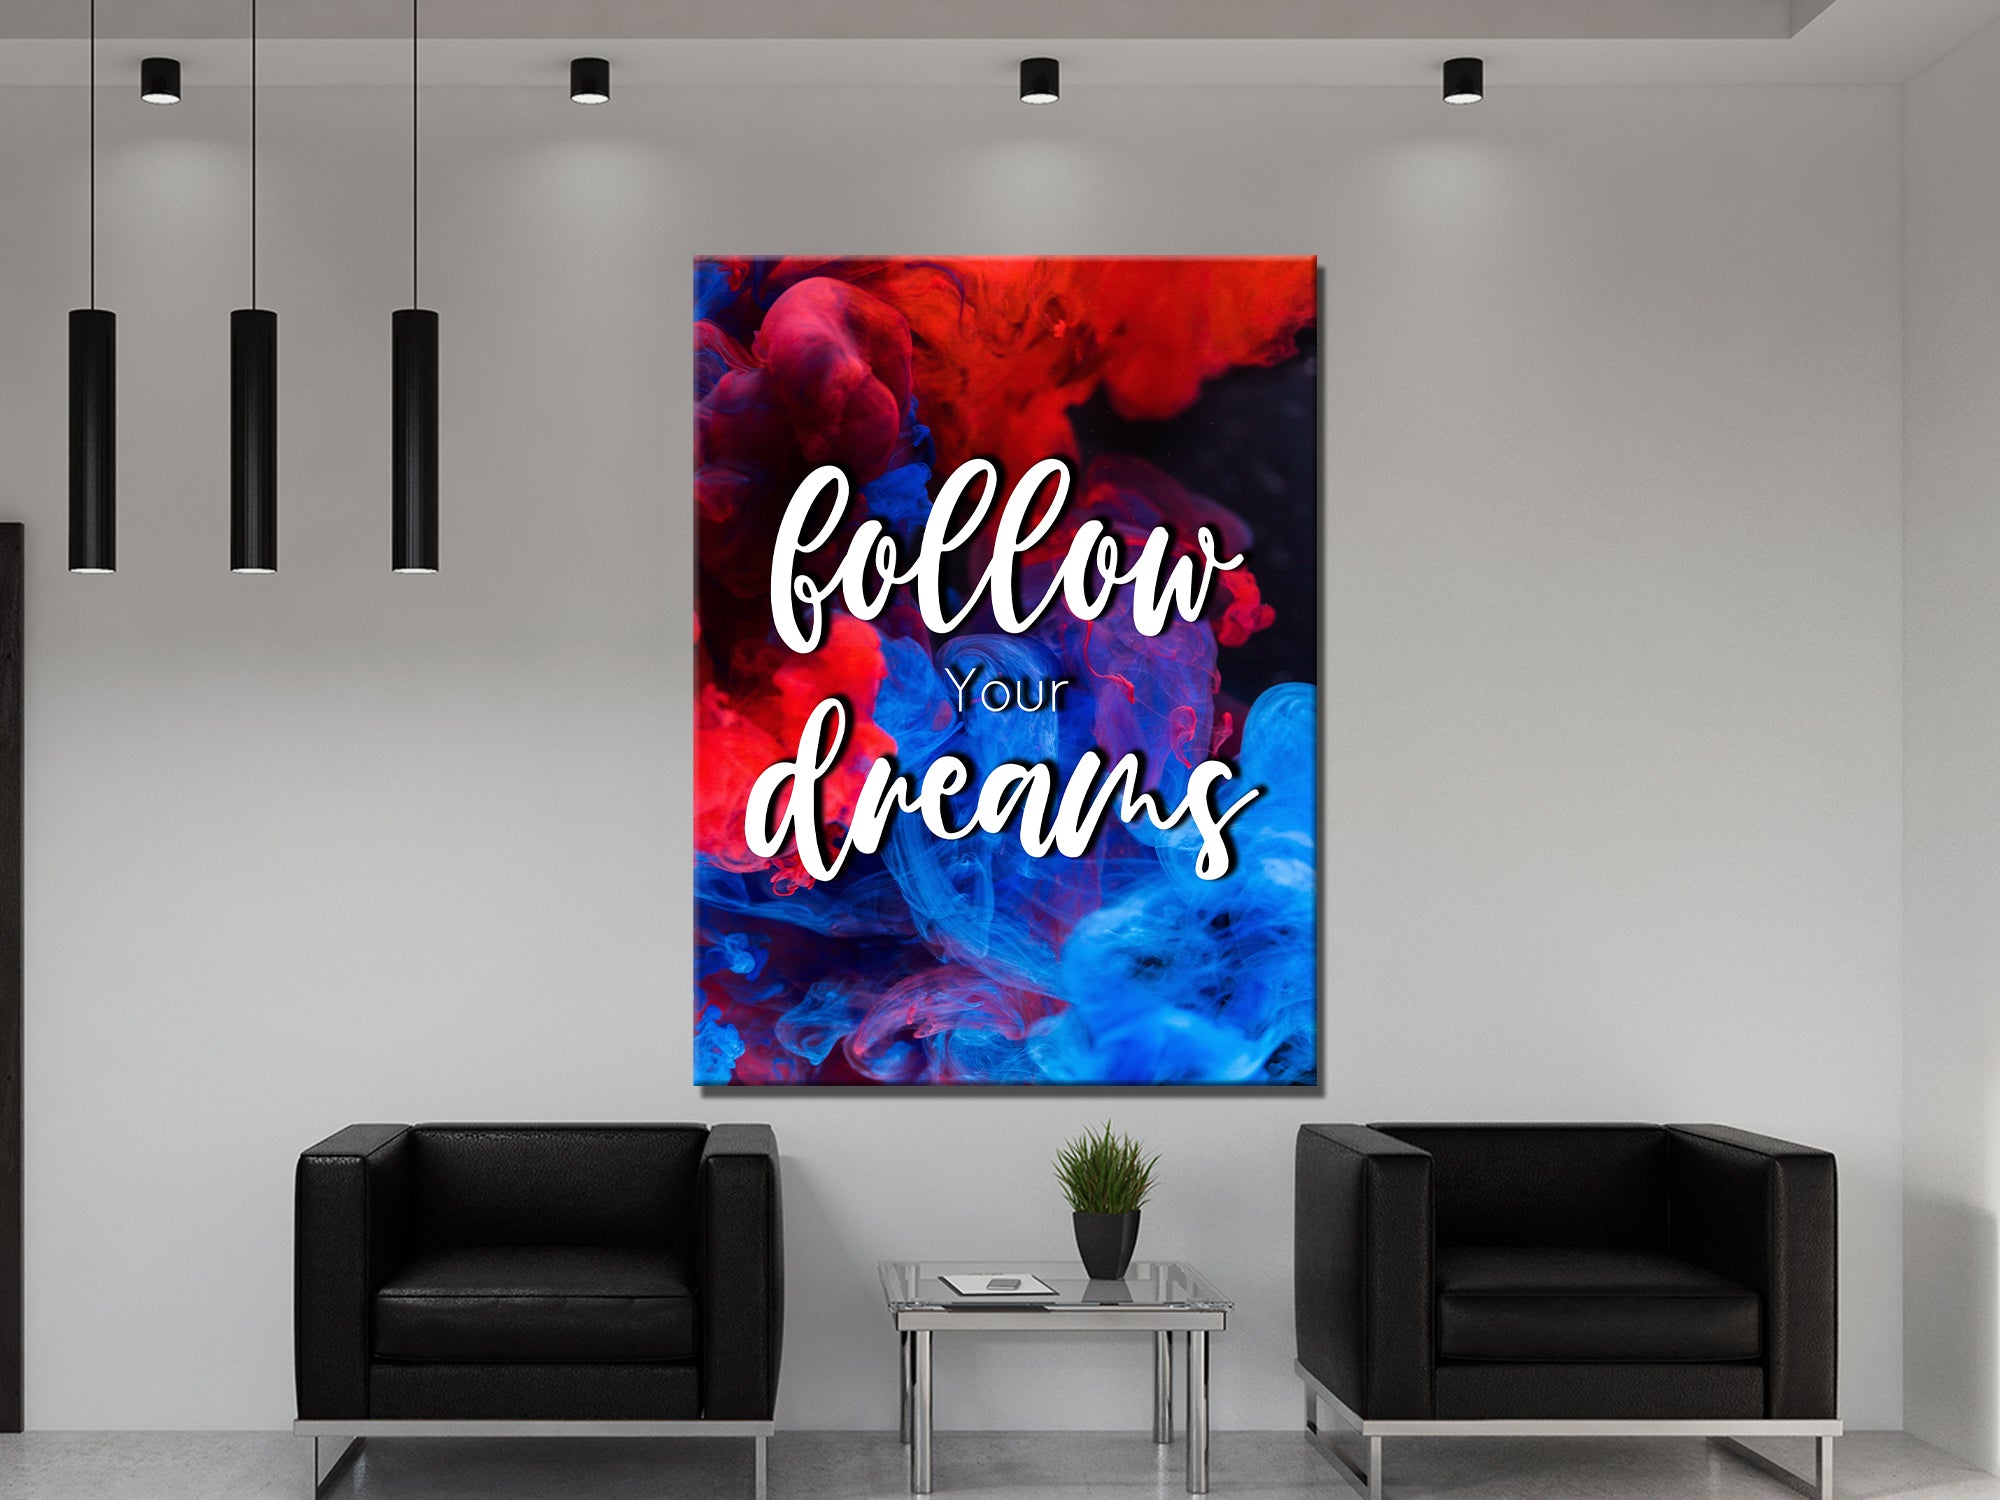 Follow Your Dreams - Inspiring - Canvas Wall Art